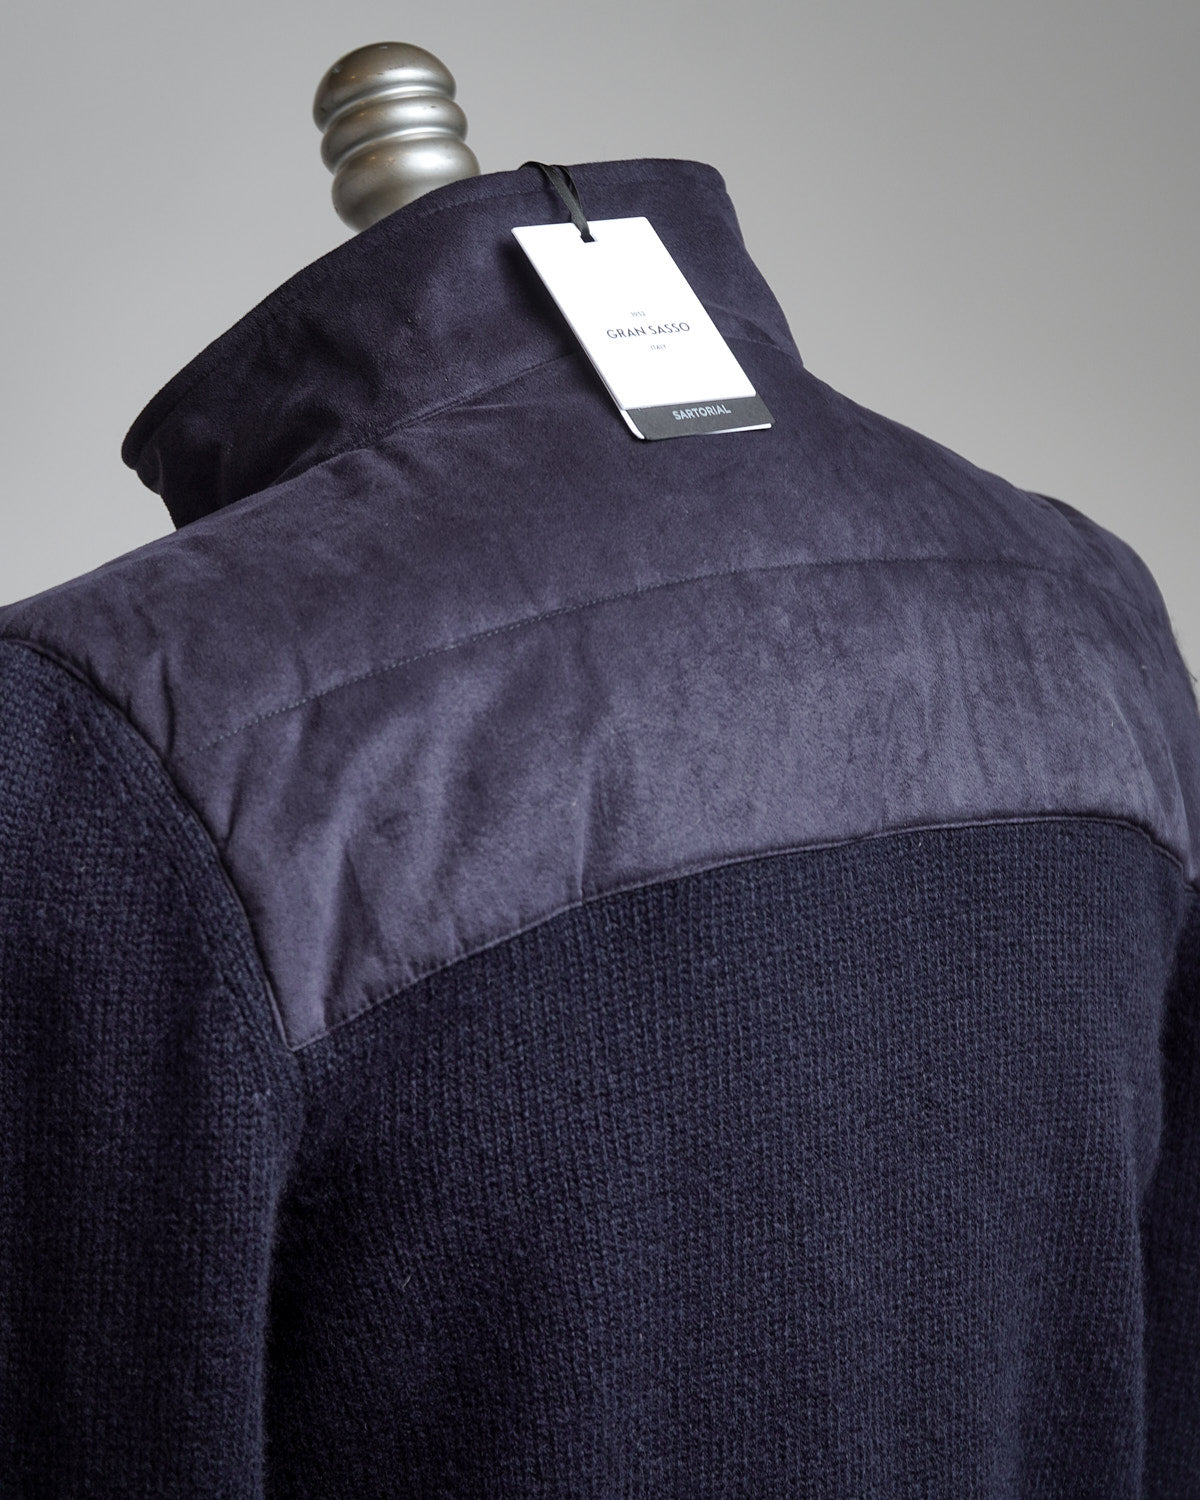 Gran Sasso Wool Mix Media Jacket -  – Blazer For Men